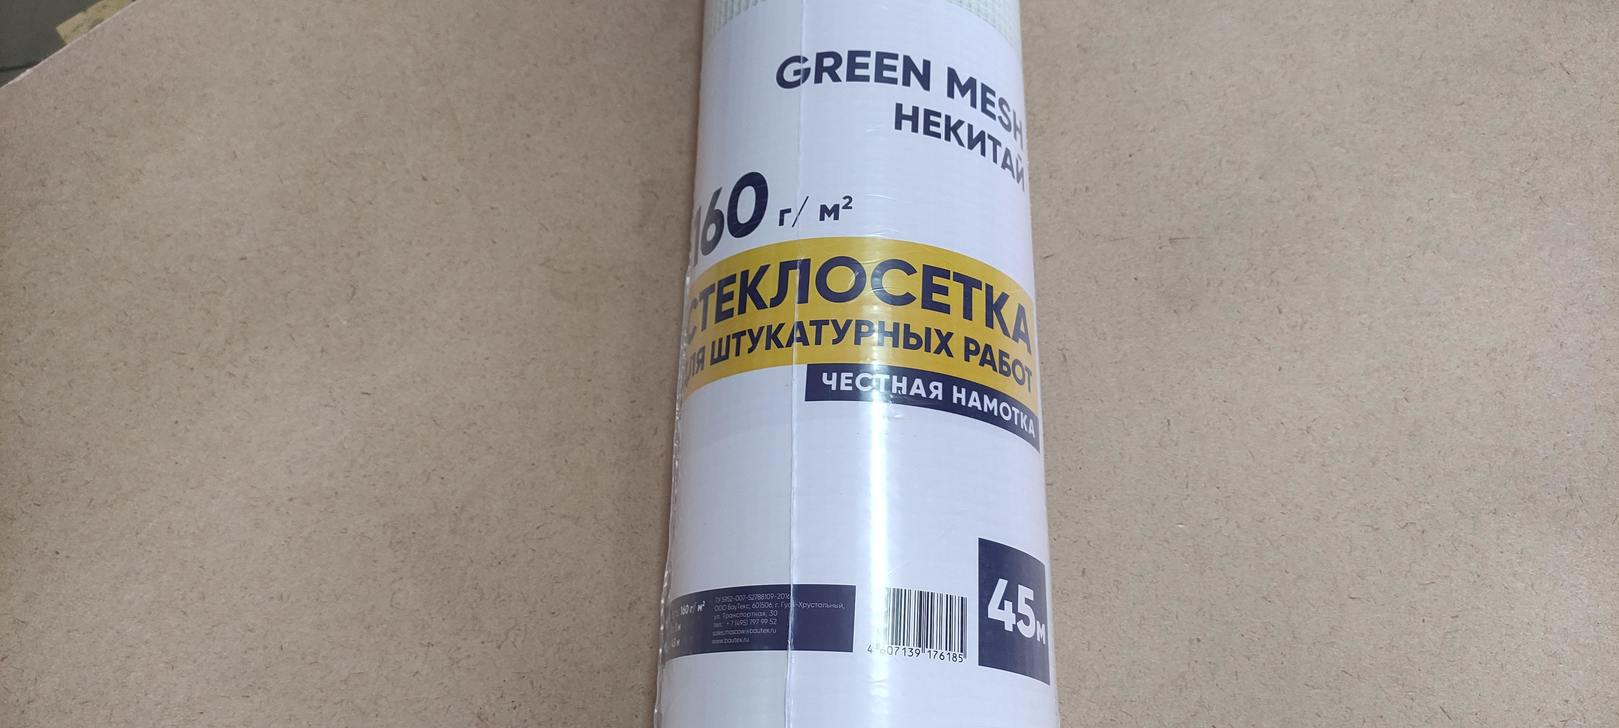 Стеклосетка GreenMesh 160 г/м2 (1х45 м) БАУТЕКС